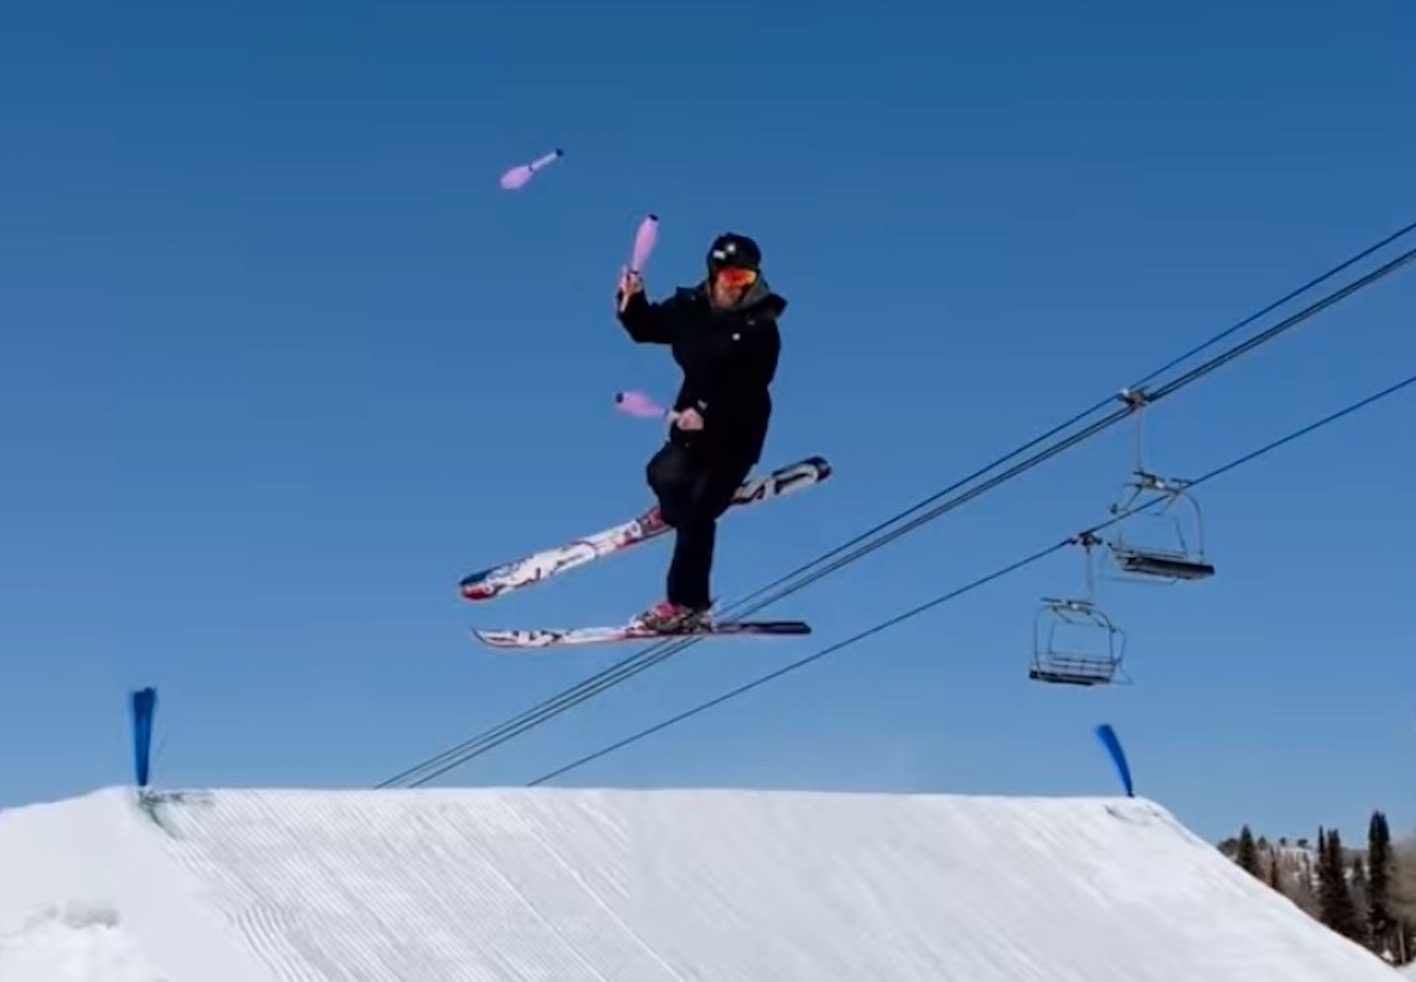 VIDEO: Skier Lands 720 While Juggling